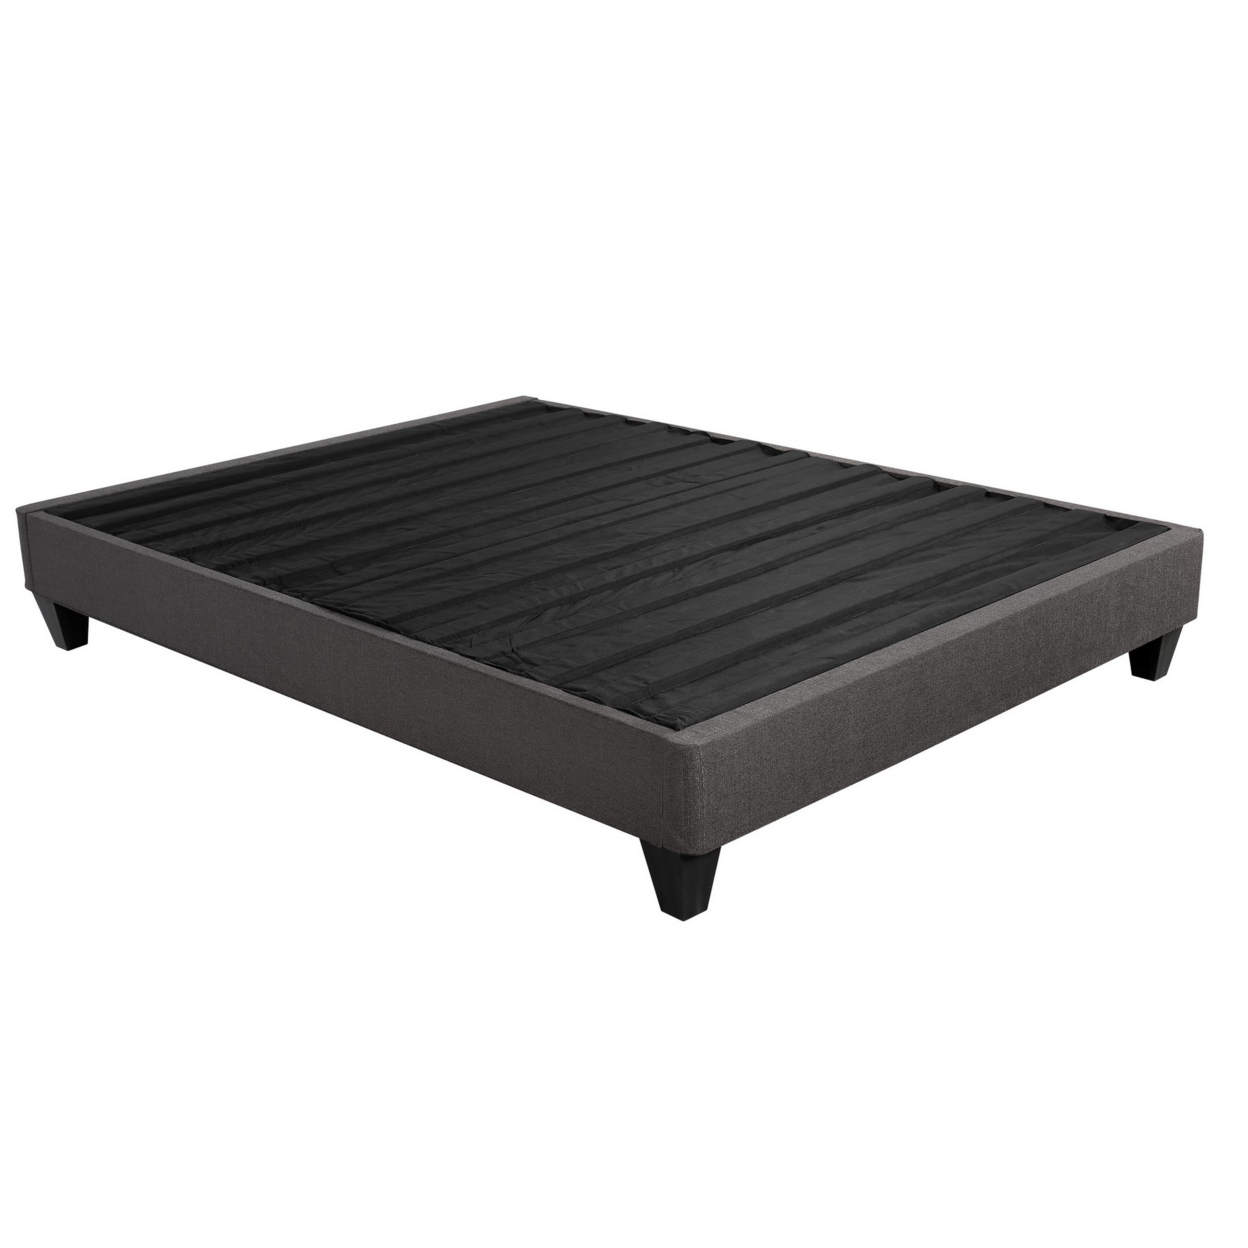 Tamy California King Size Platform Bed Frame, Dark Gray Linen Upholstery- Saltoro Sherpi